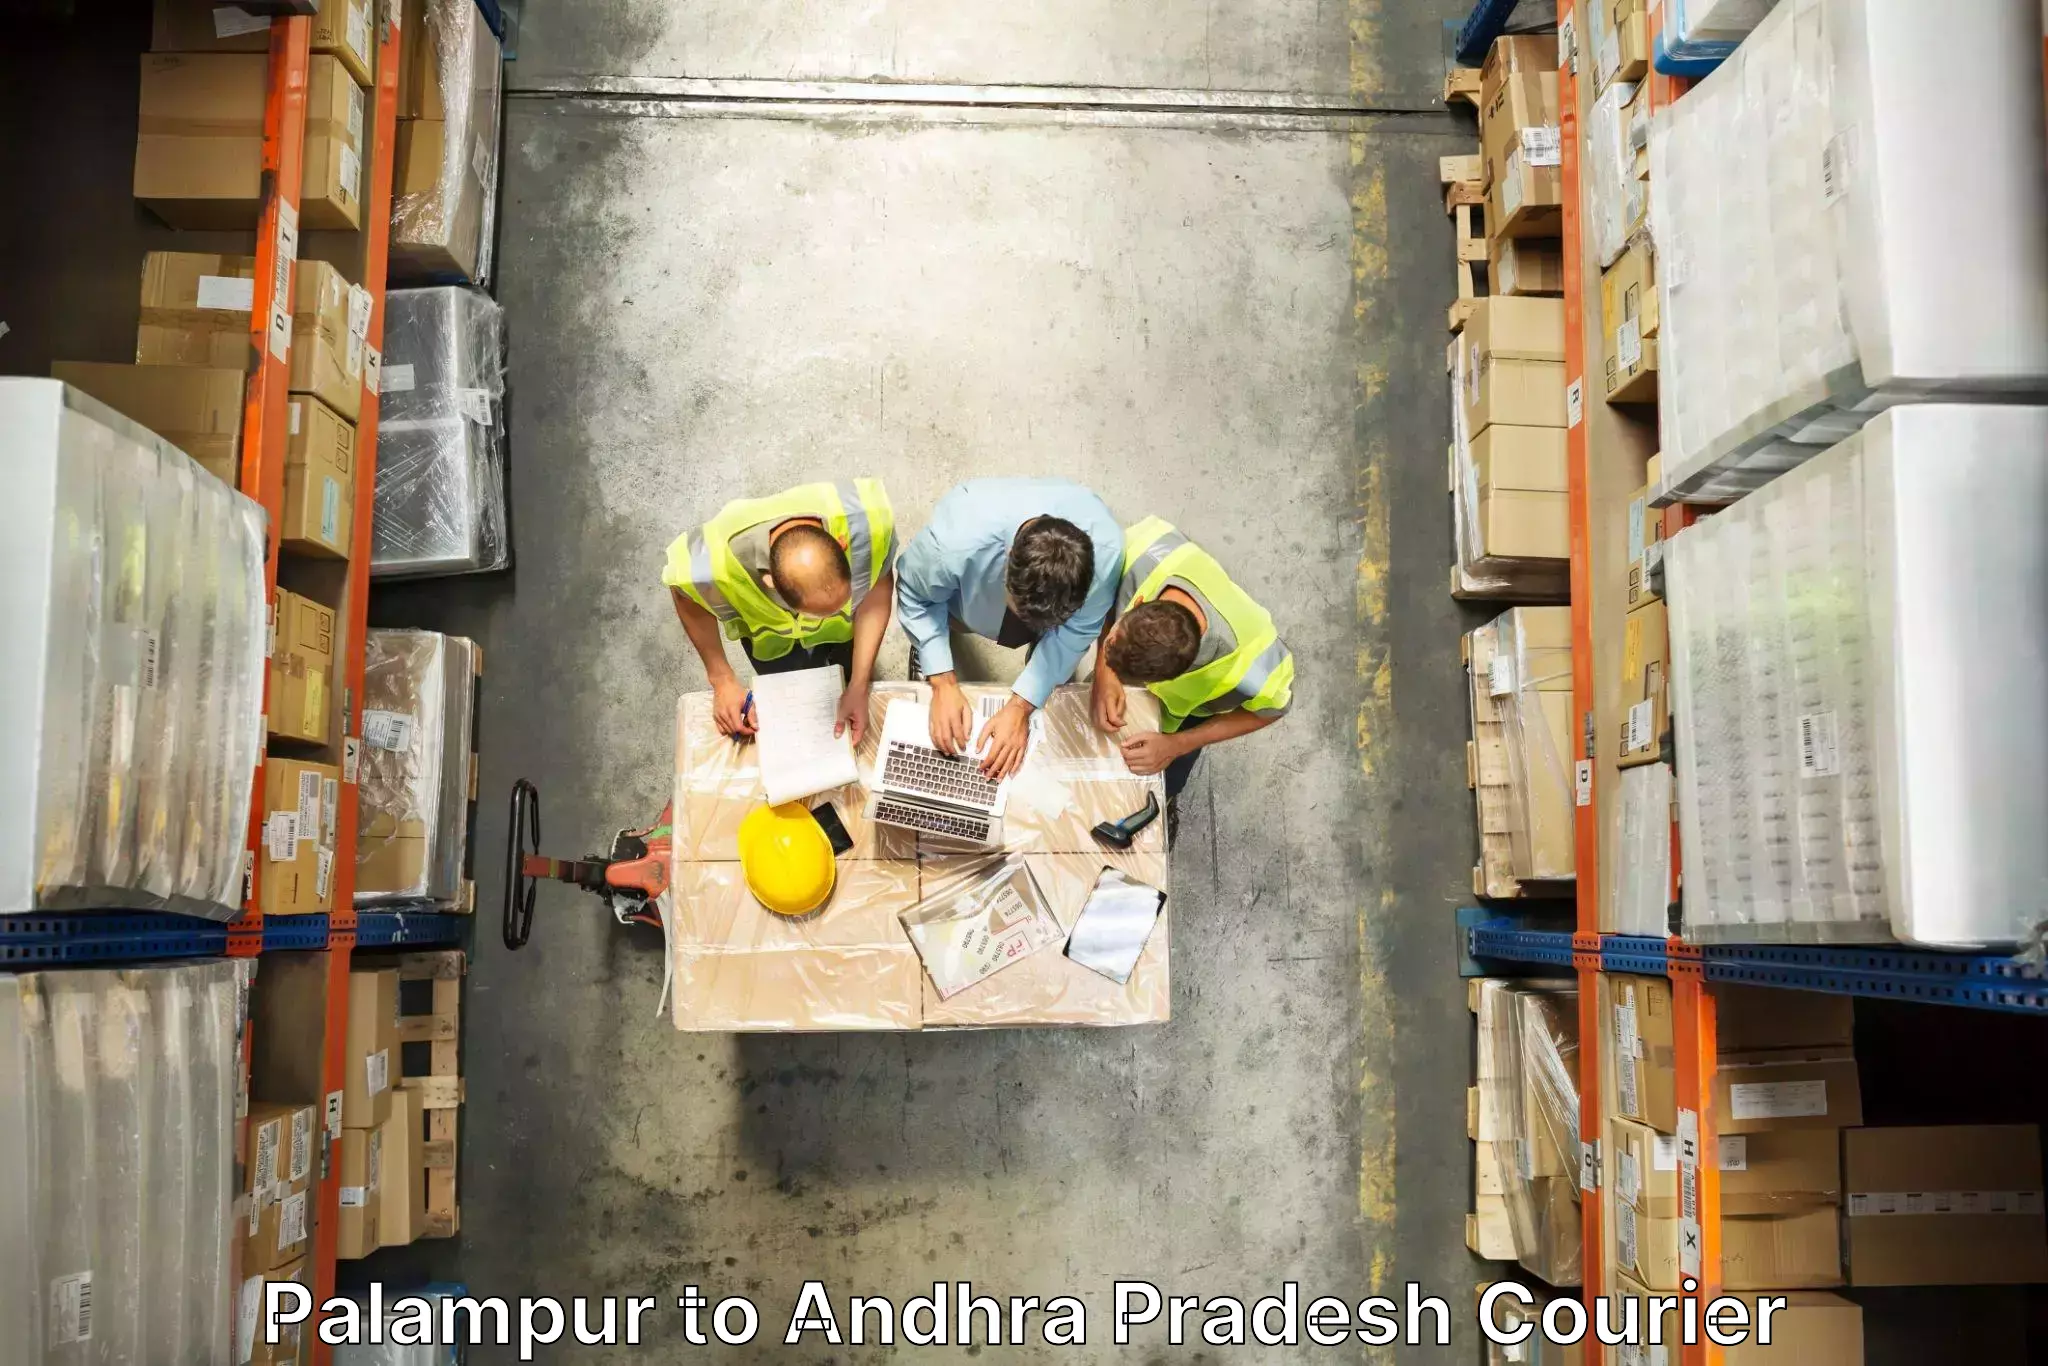 Furniture transport experts Palampur to Visakhapatnam Port